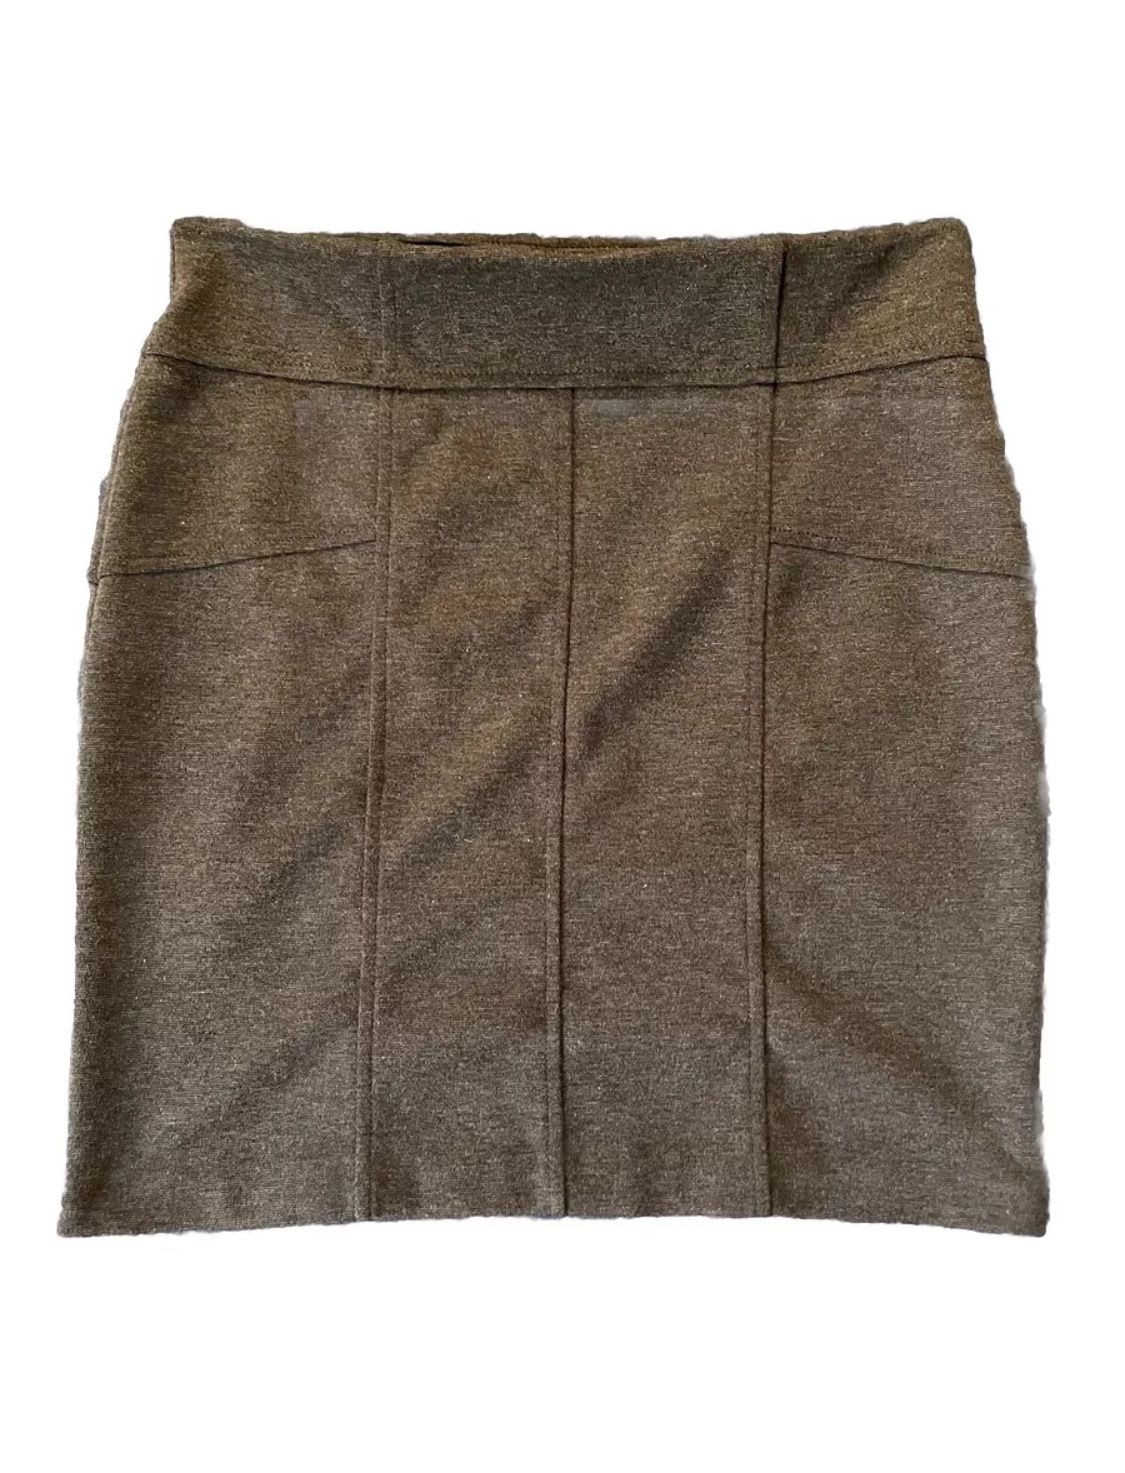 Simply Vera Wang Charcoal Gray Knit Short Straight Pencil Skirt SMALL Petite